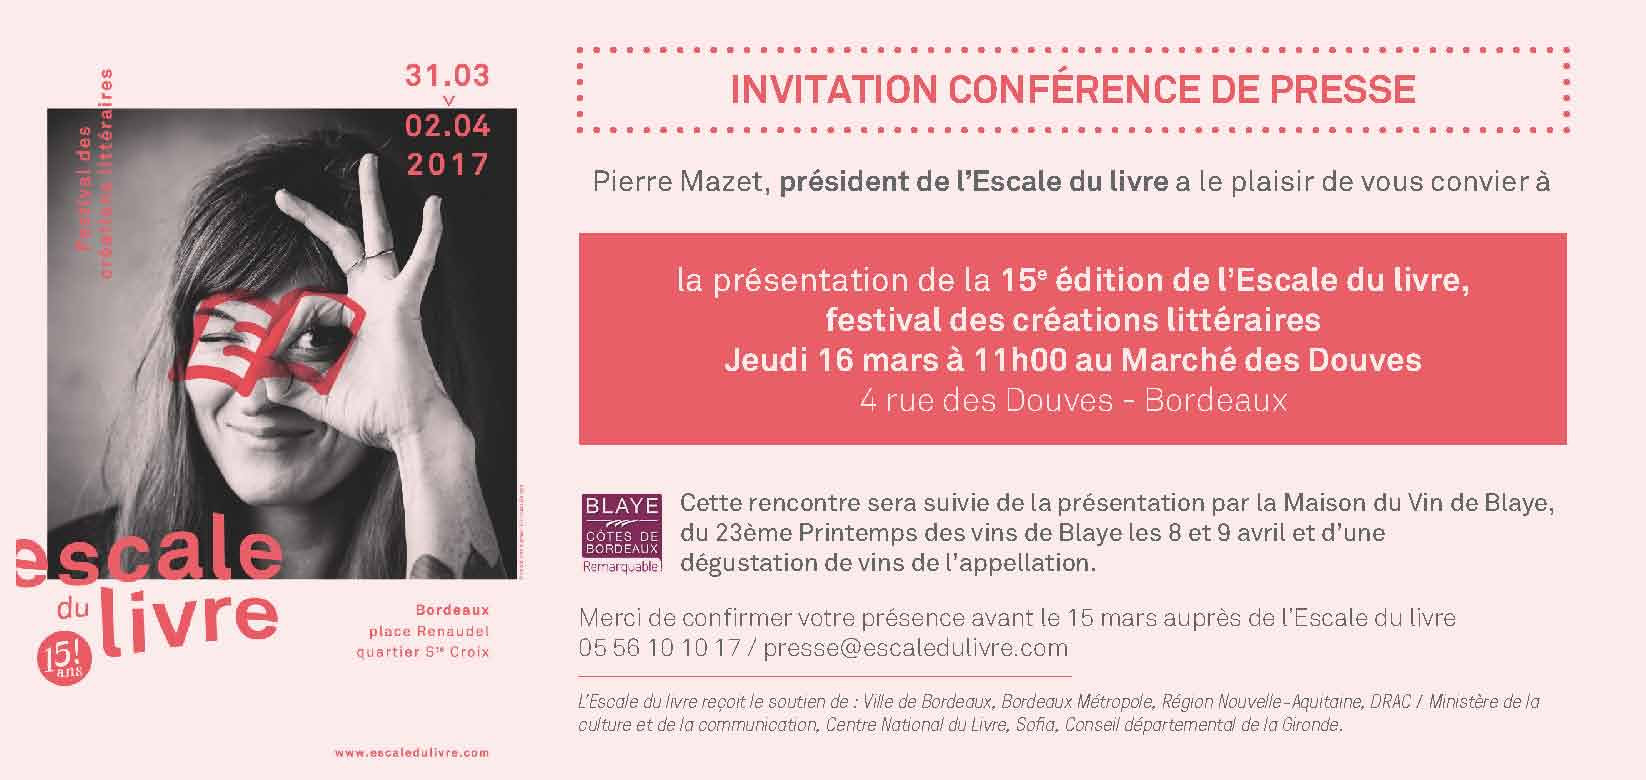 edl17-conference-de-presse-16-03-17